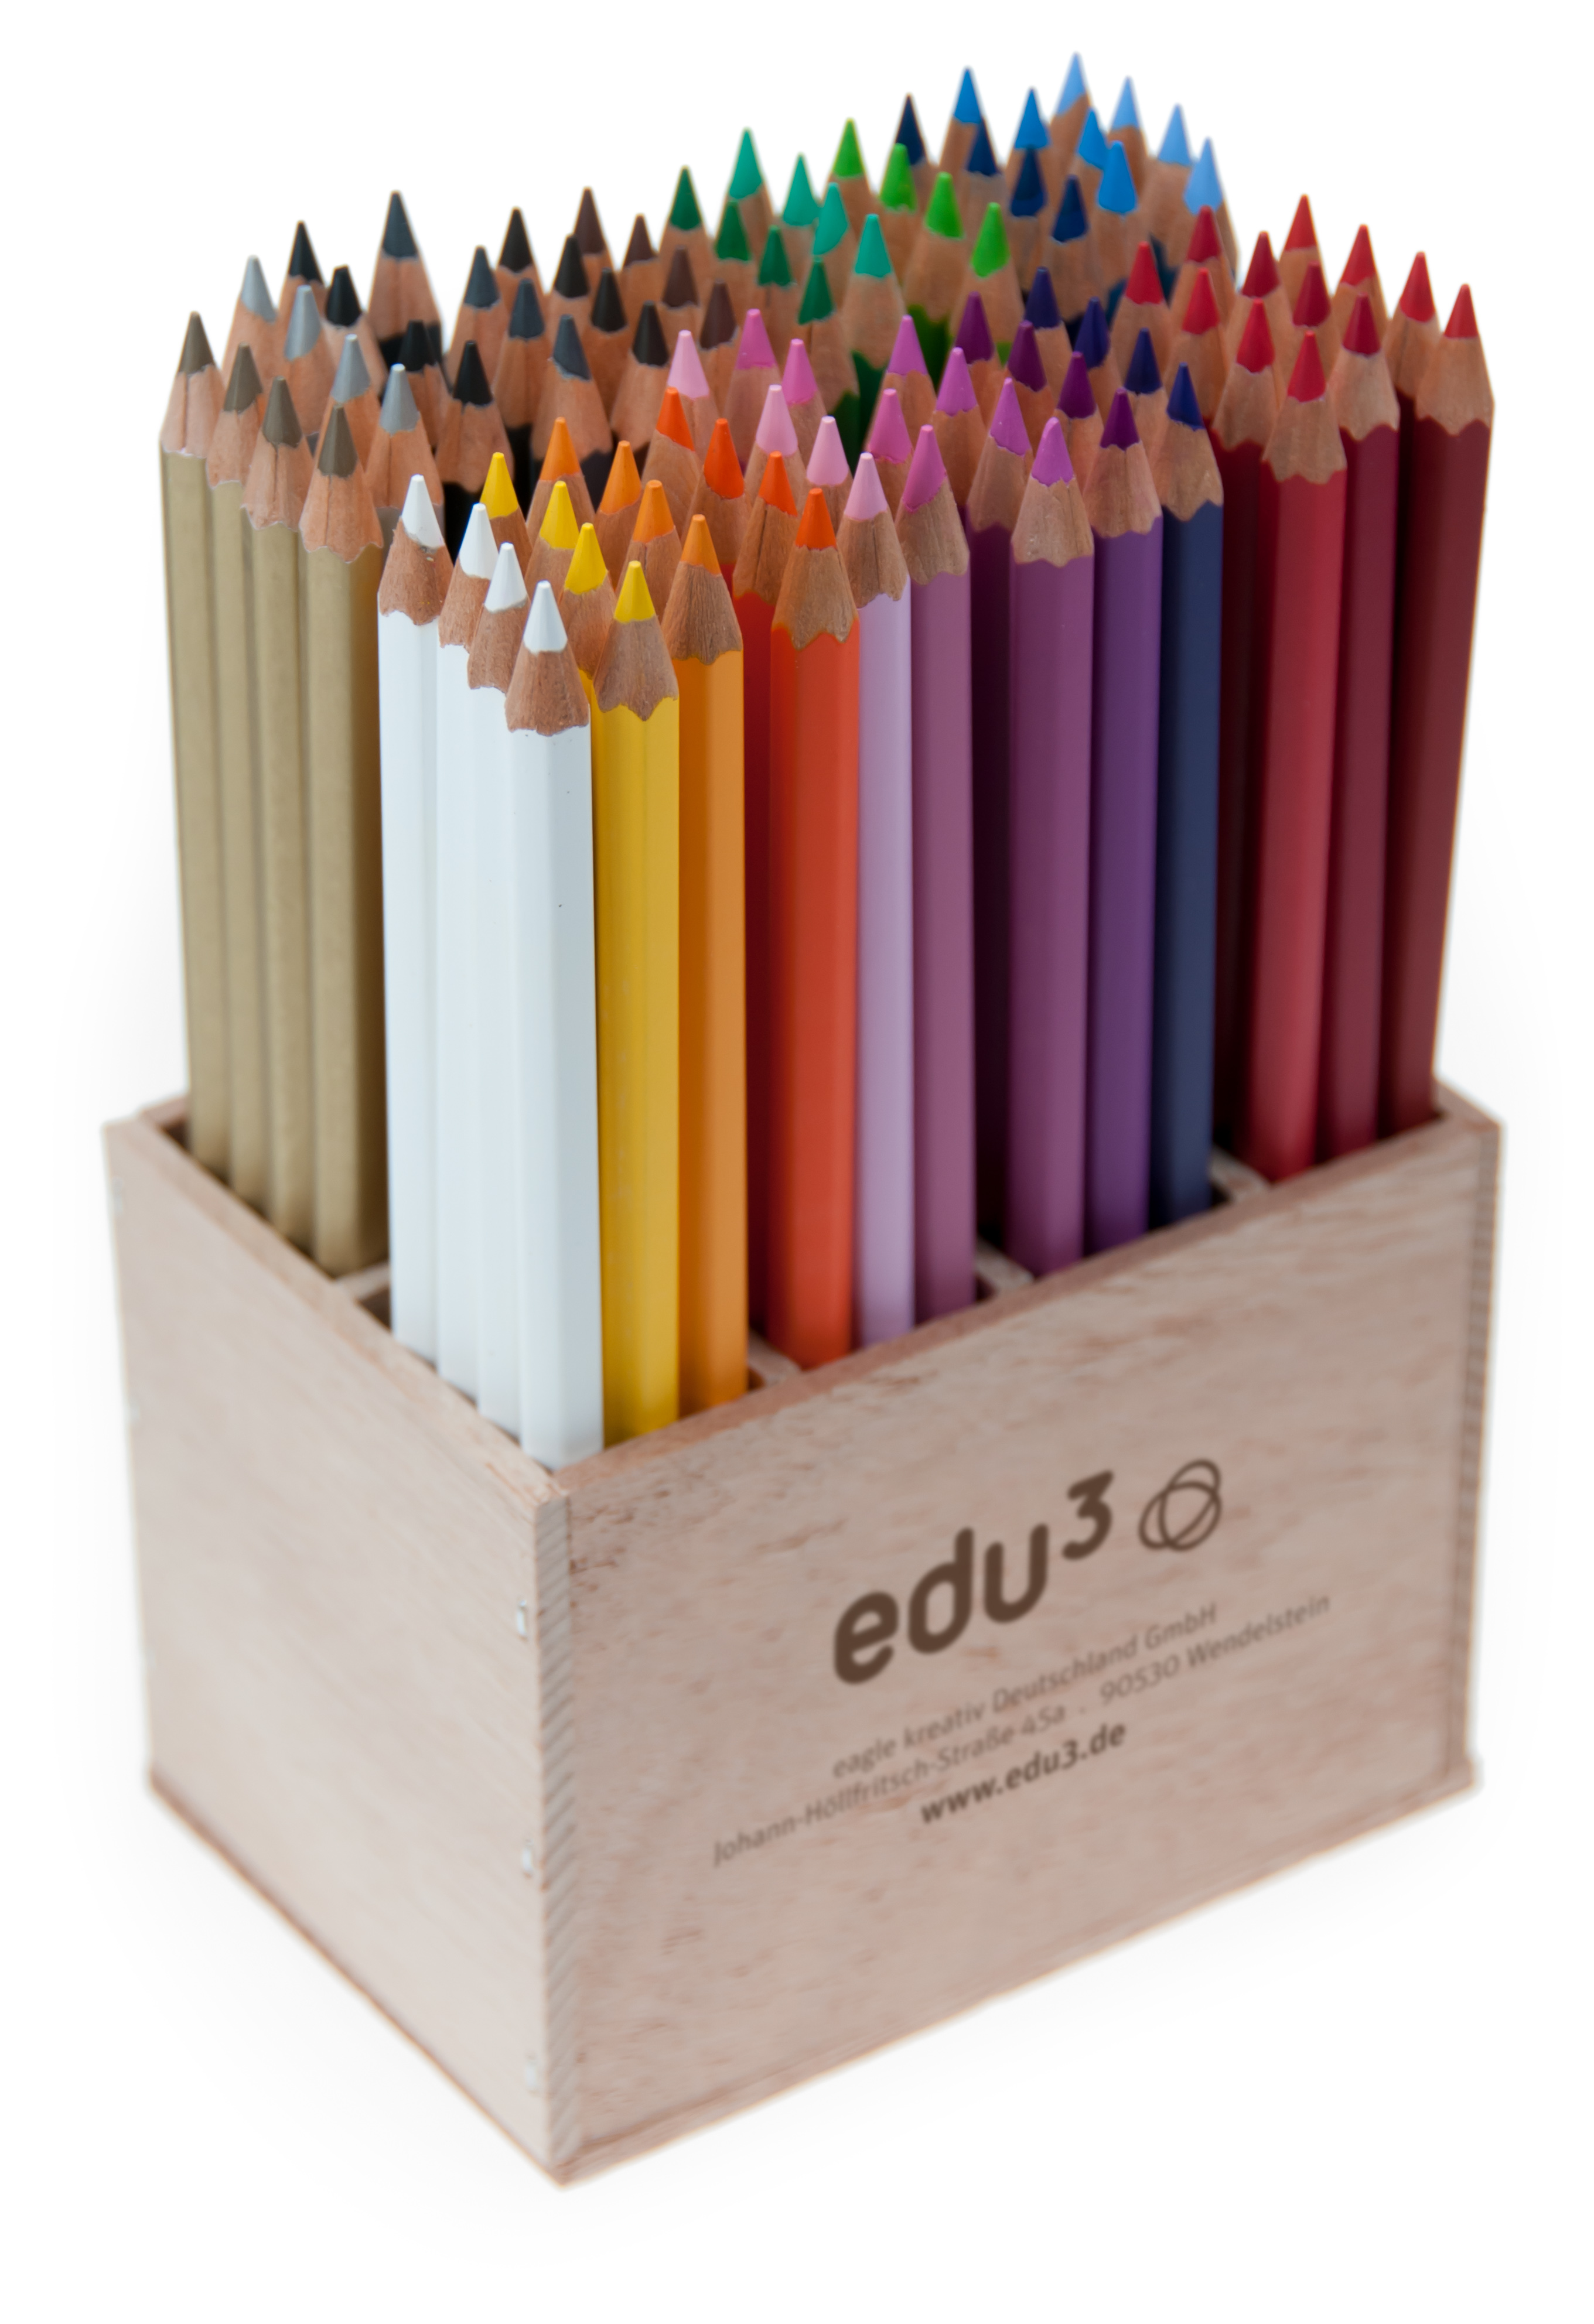 edu³ JUNIOR colored pencils hex wooden display